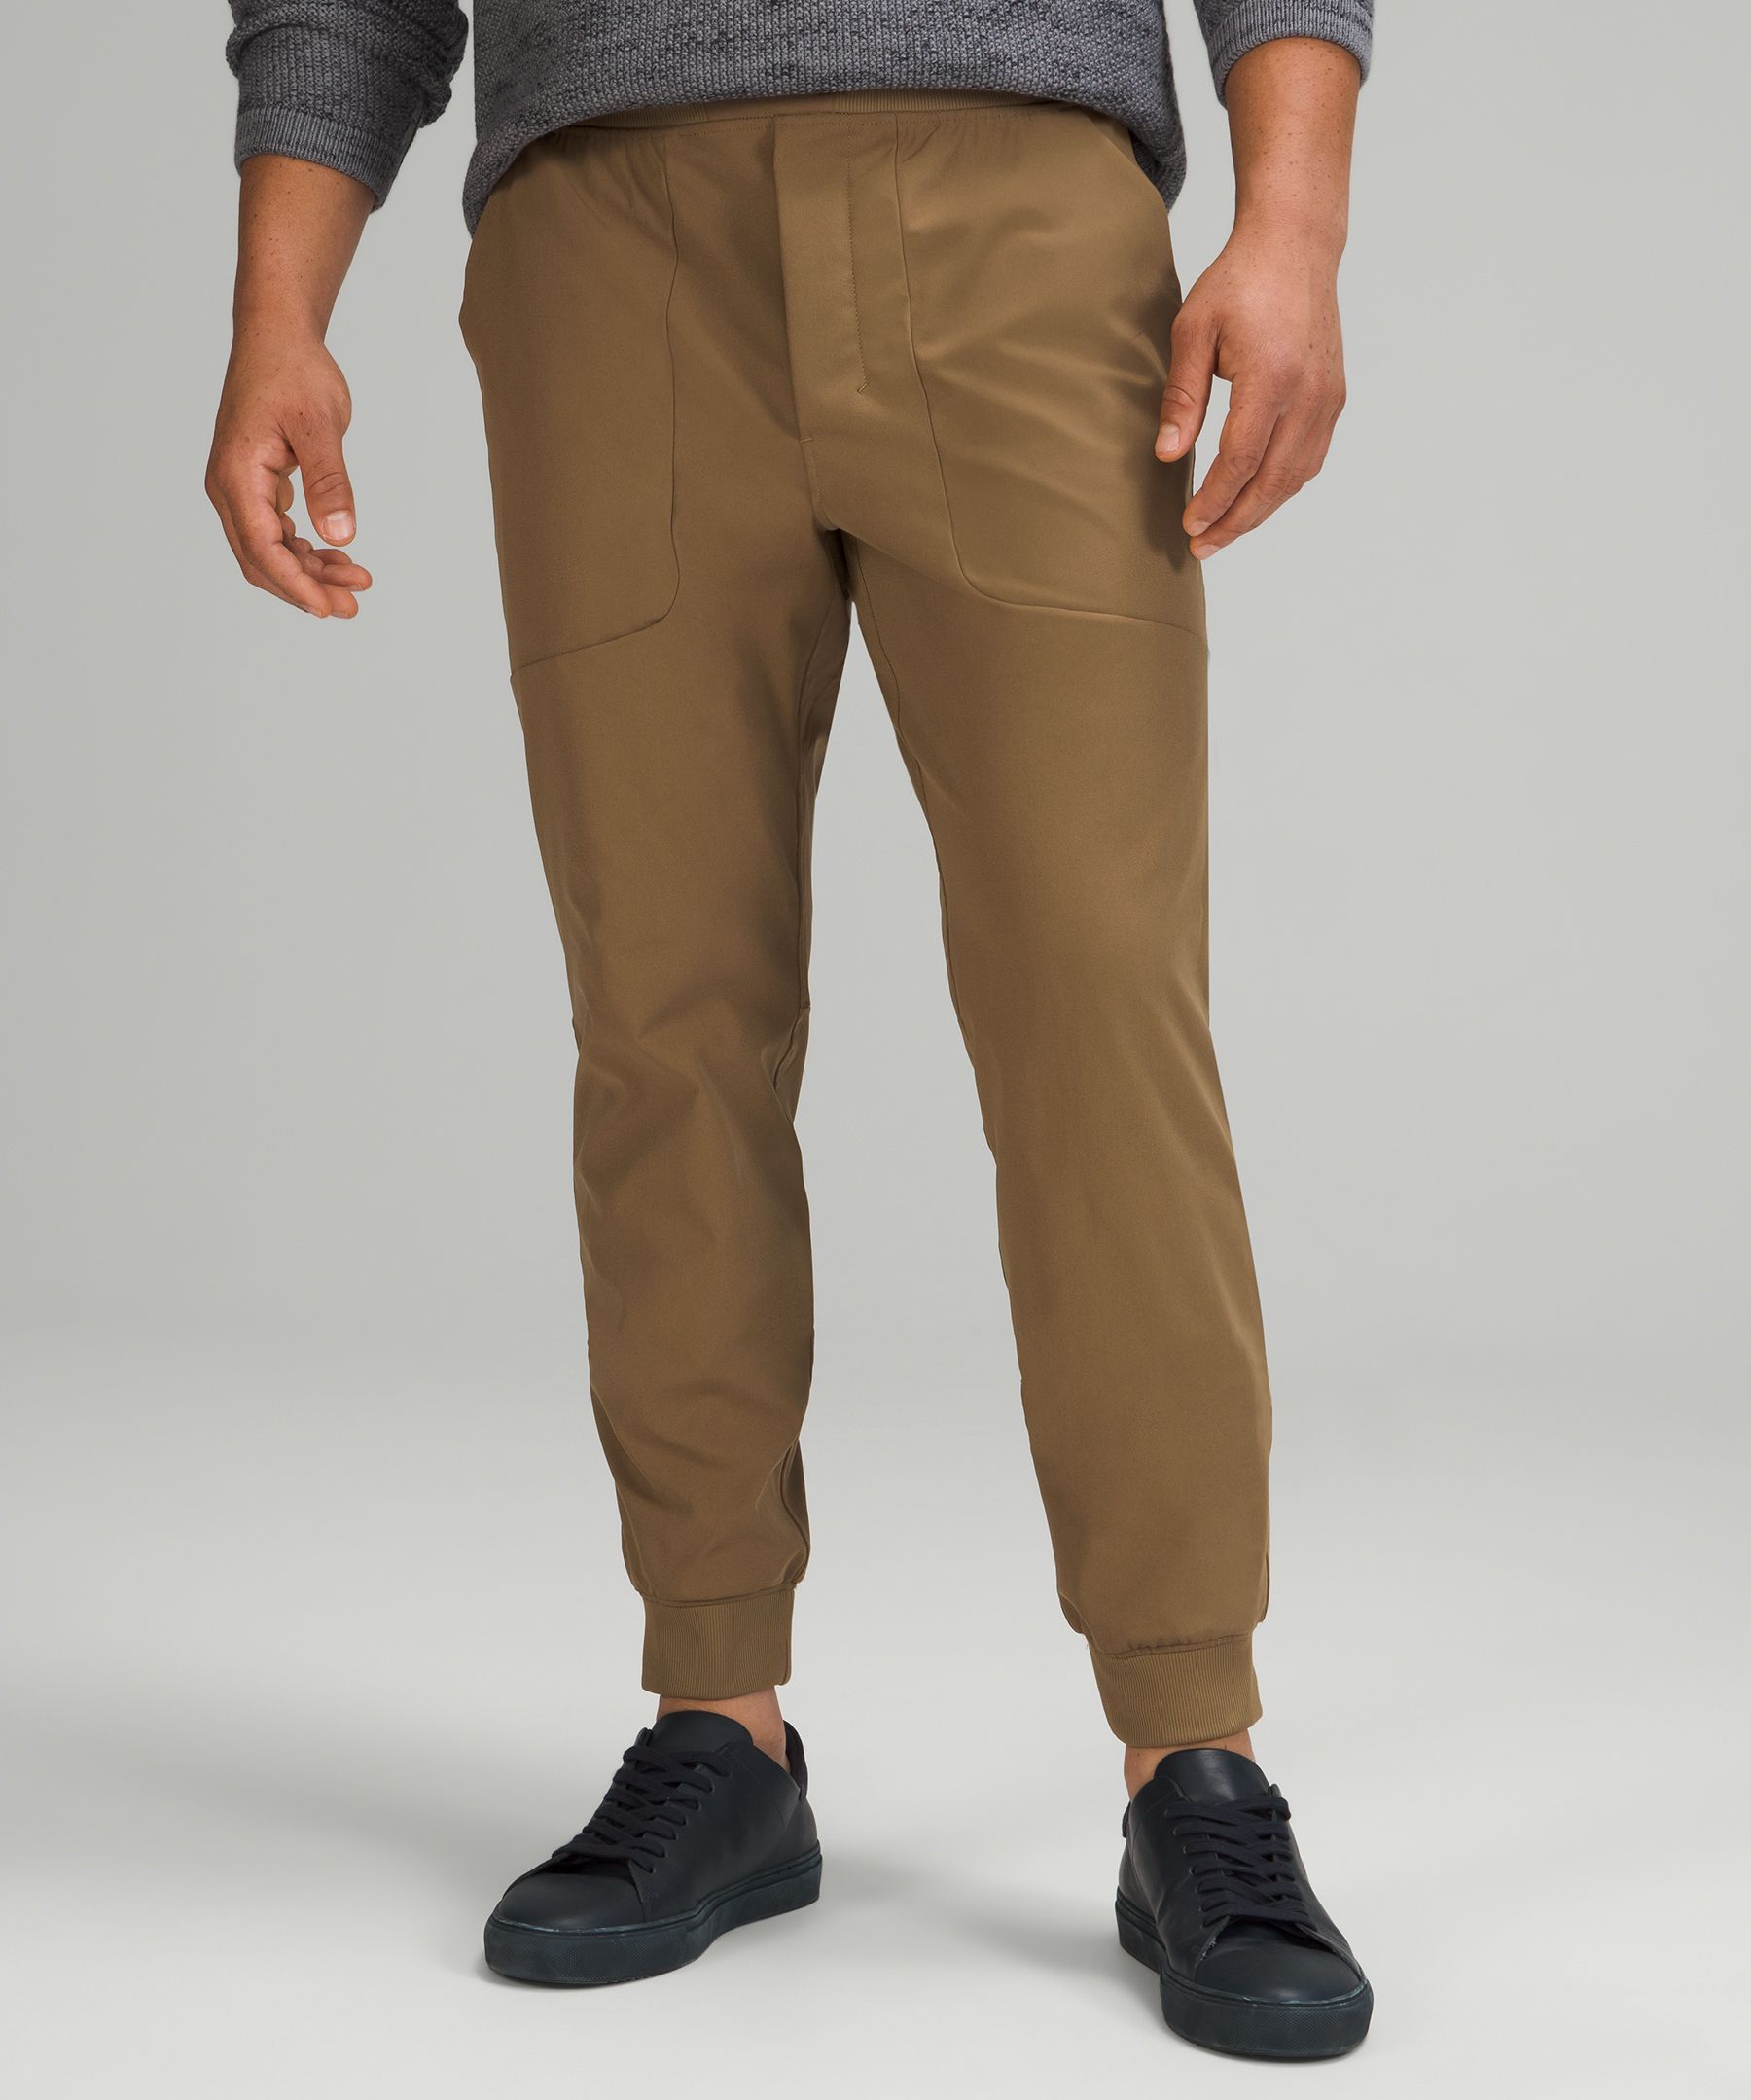 lululemon khaki pants